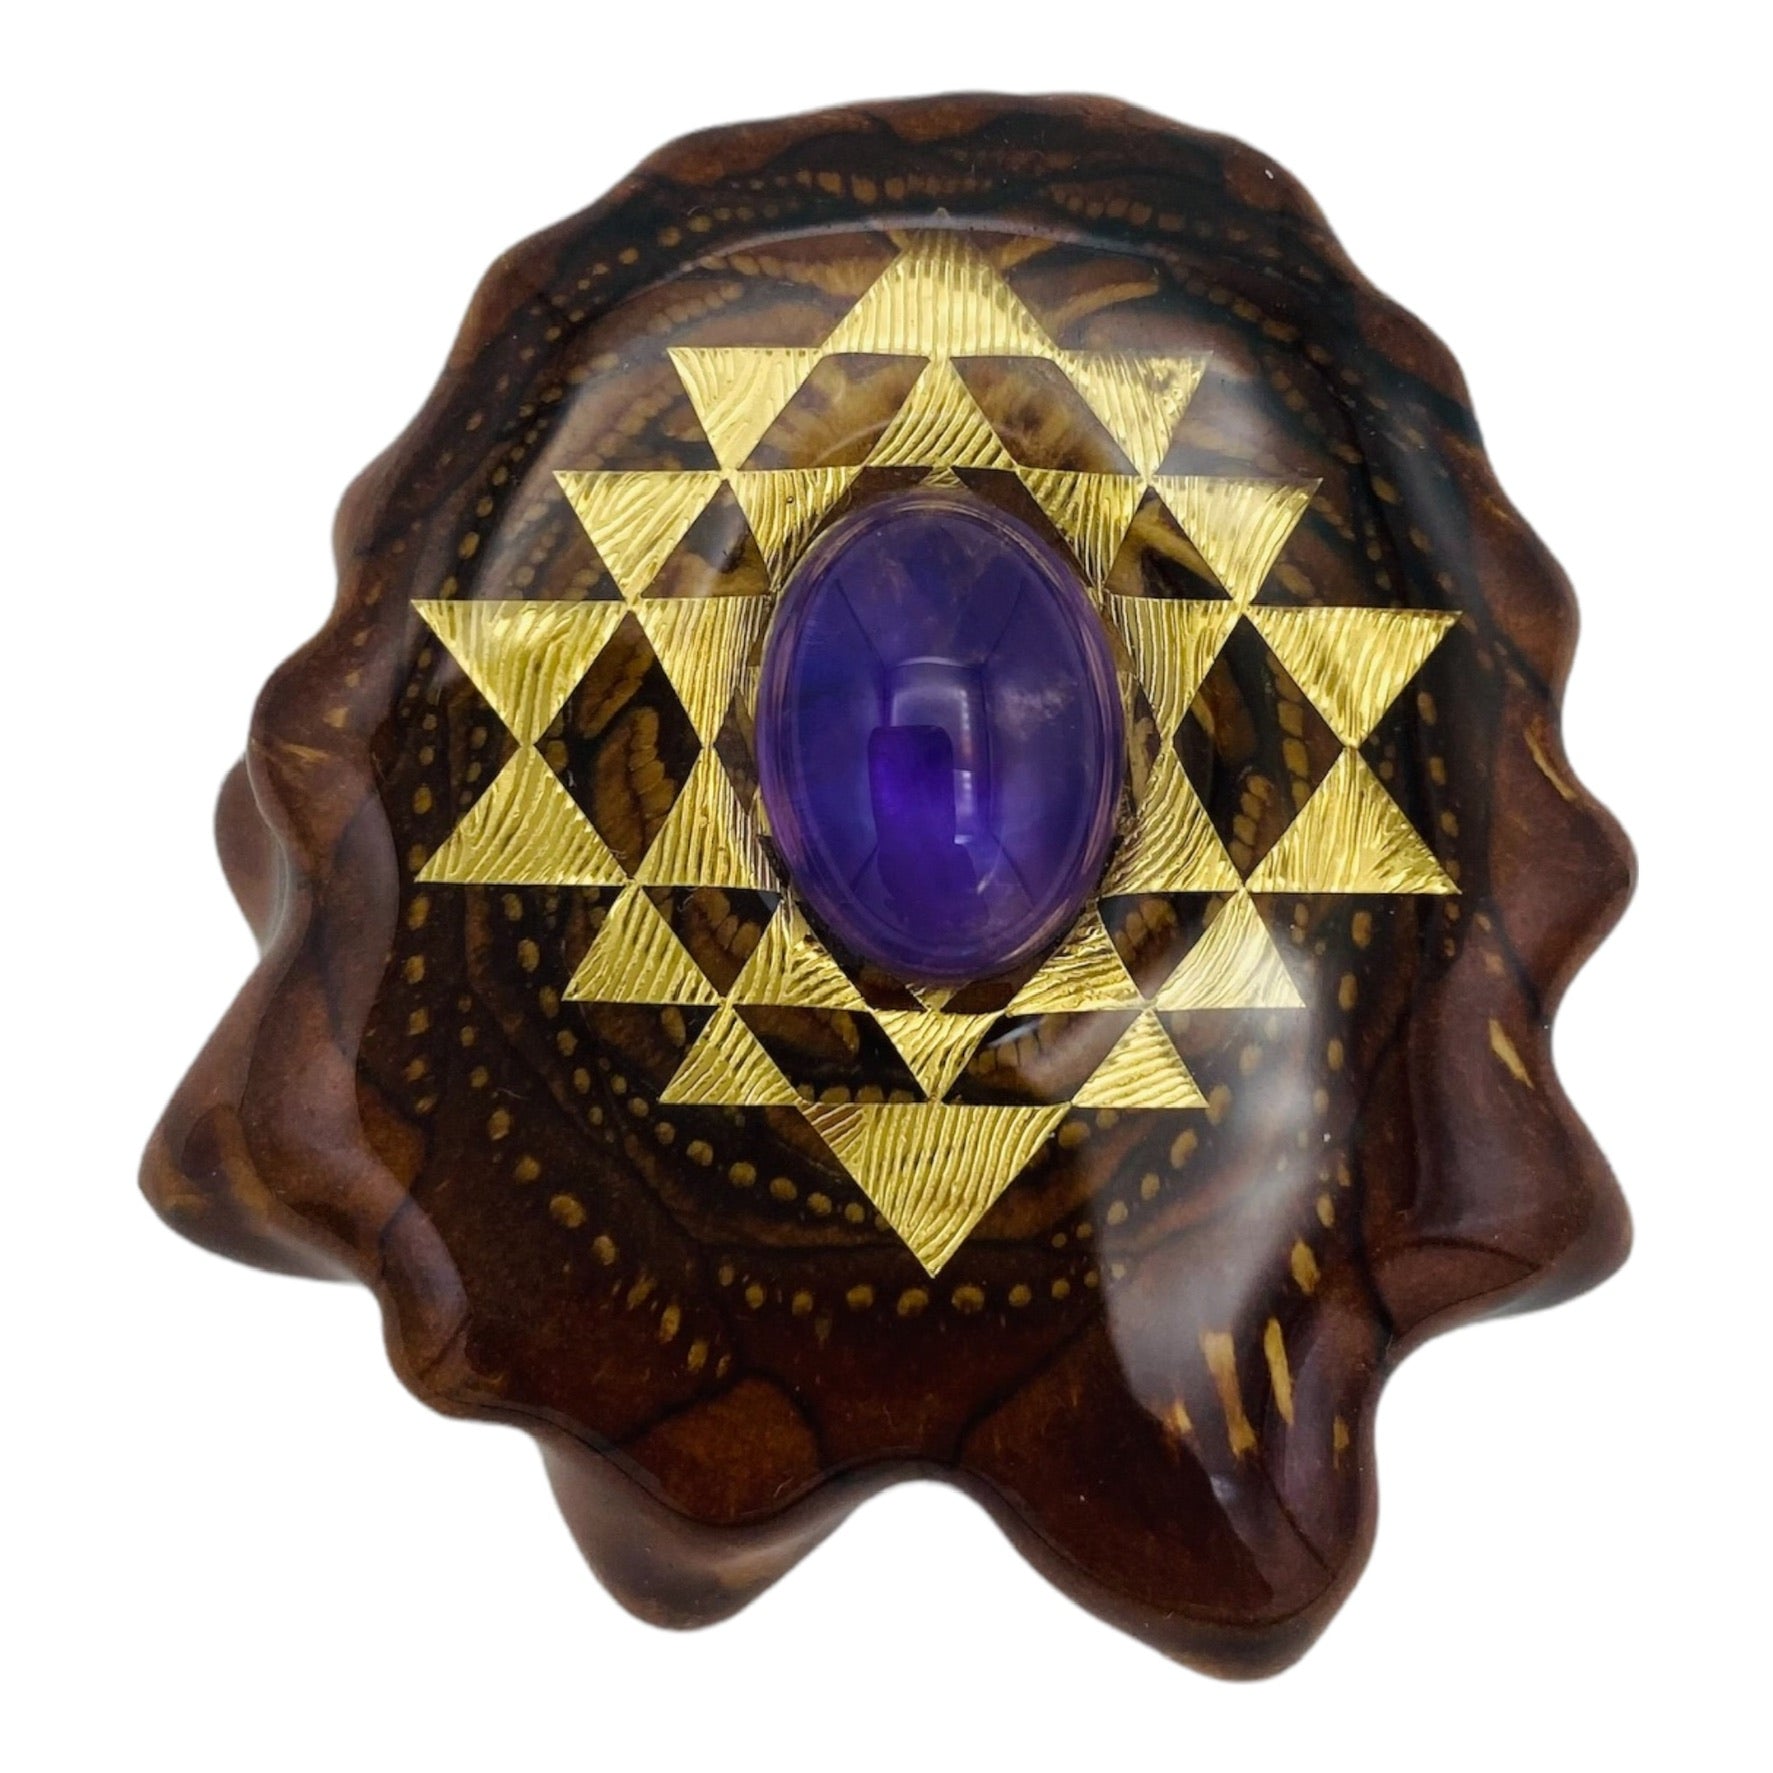 Third Eye Pinecones - Amethyst With Gold Sri Lantra - Large